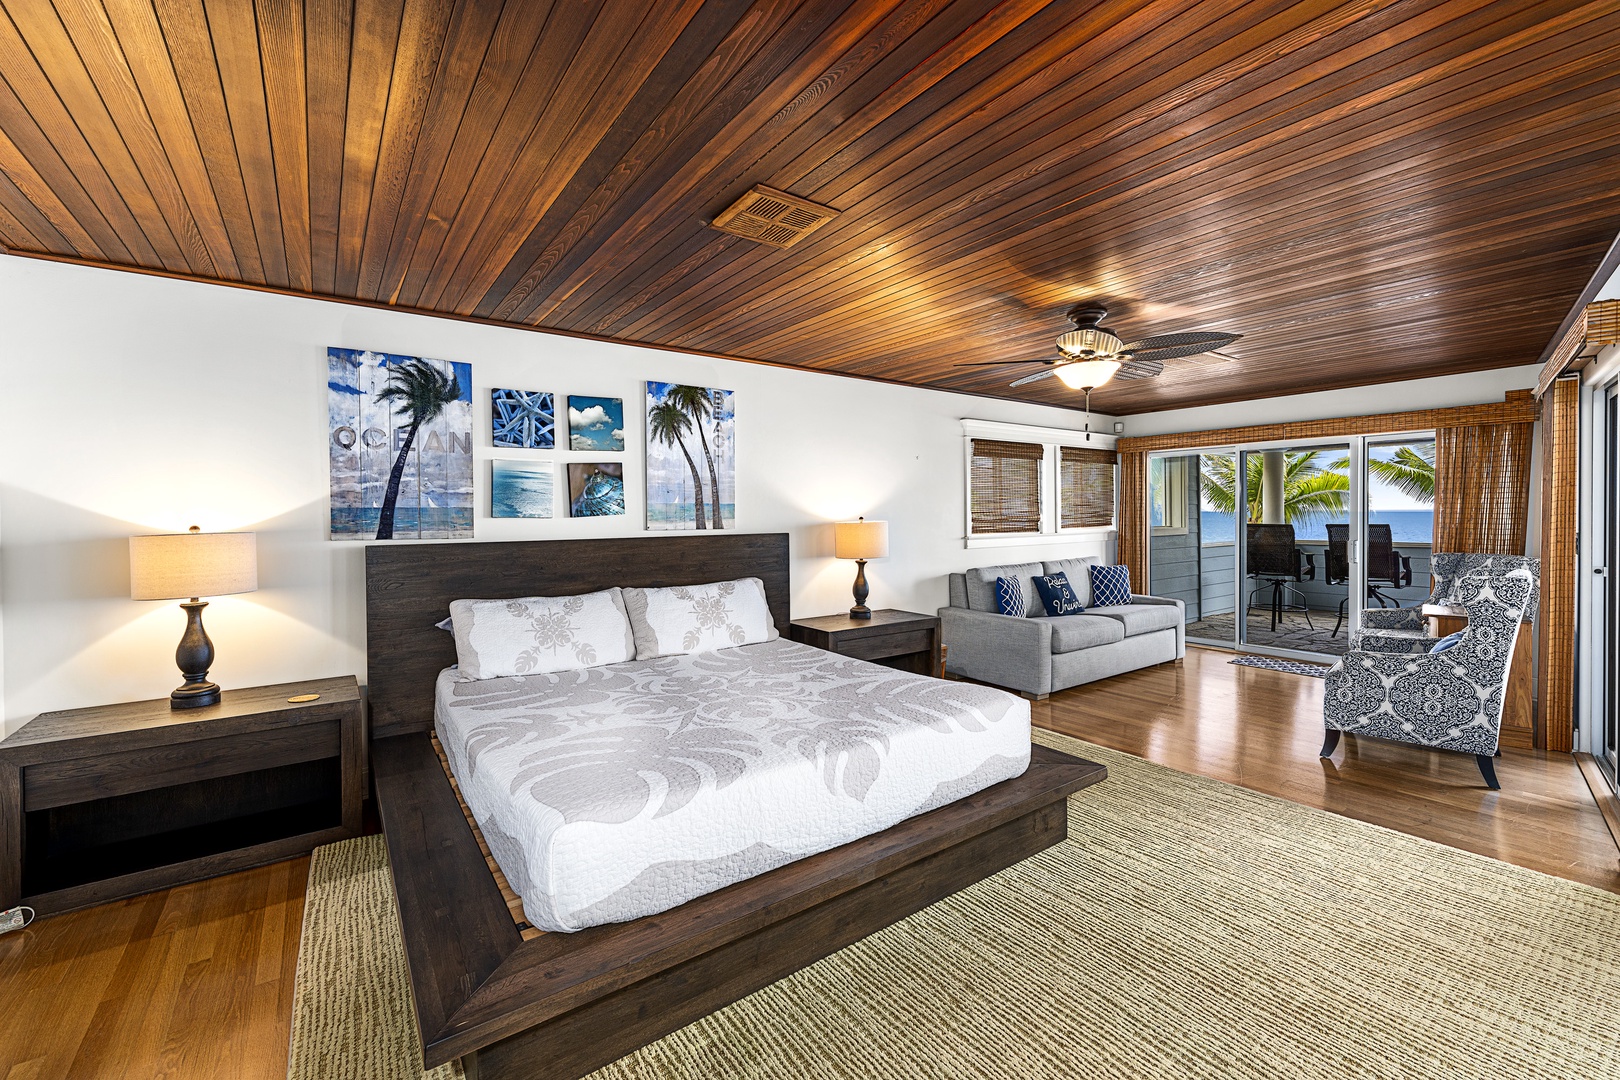 Kailua Kona Vacation Rentals, Kona Blue - Primary bedroom equipped with Restoration Hardware furnishings